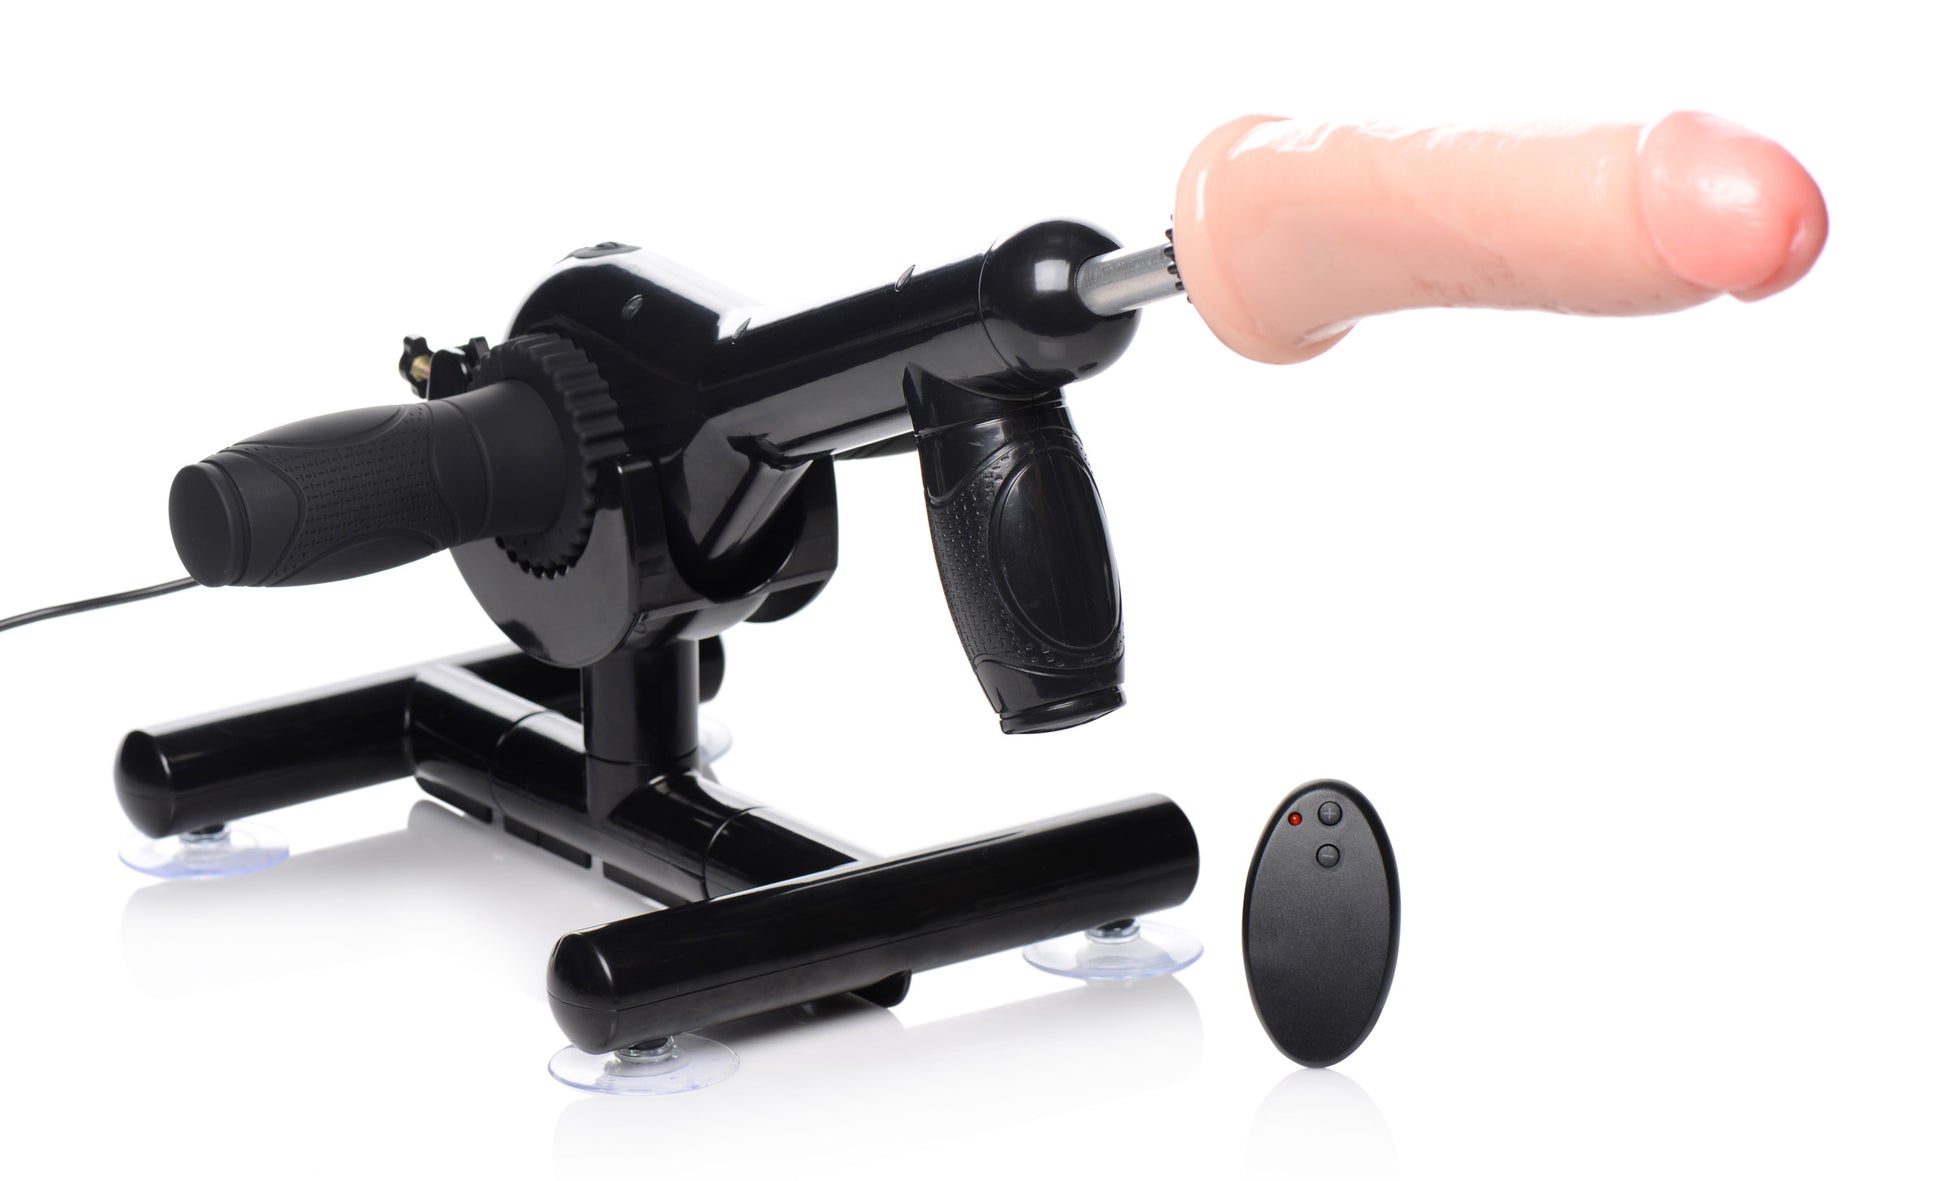 Pro-Bang Sex Machine with Remote Control - UABDSM